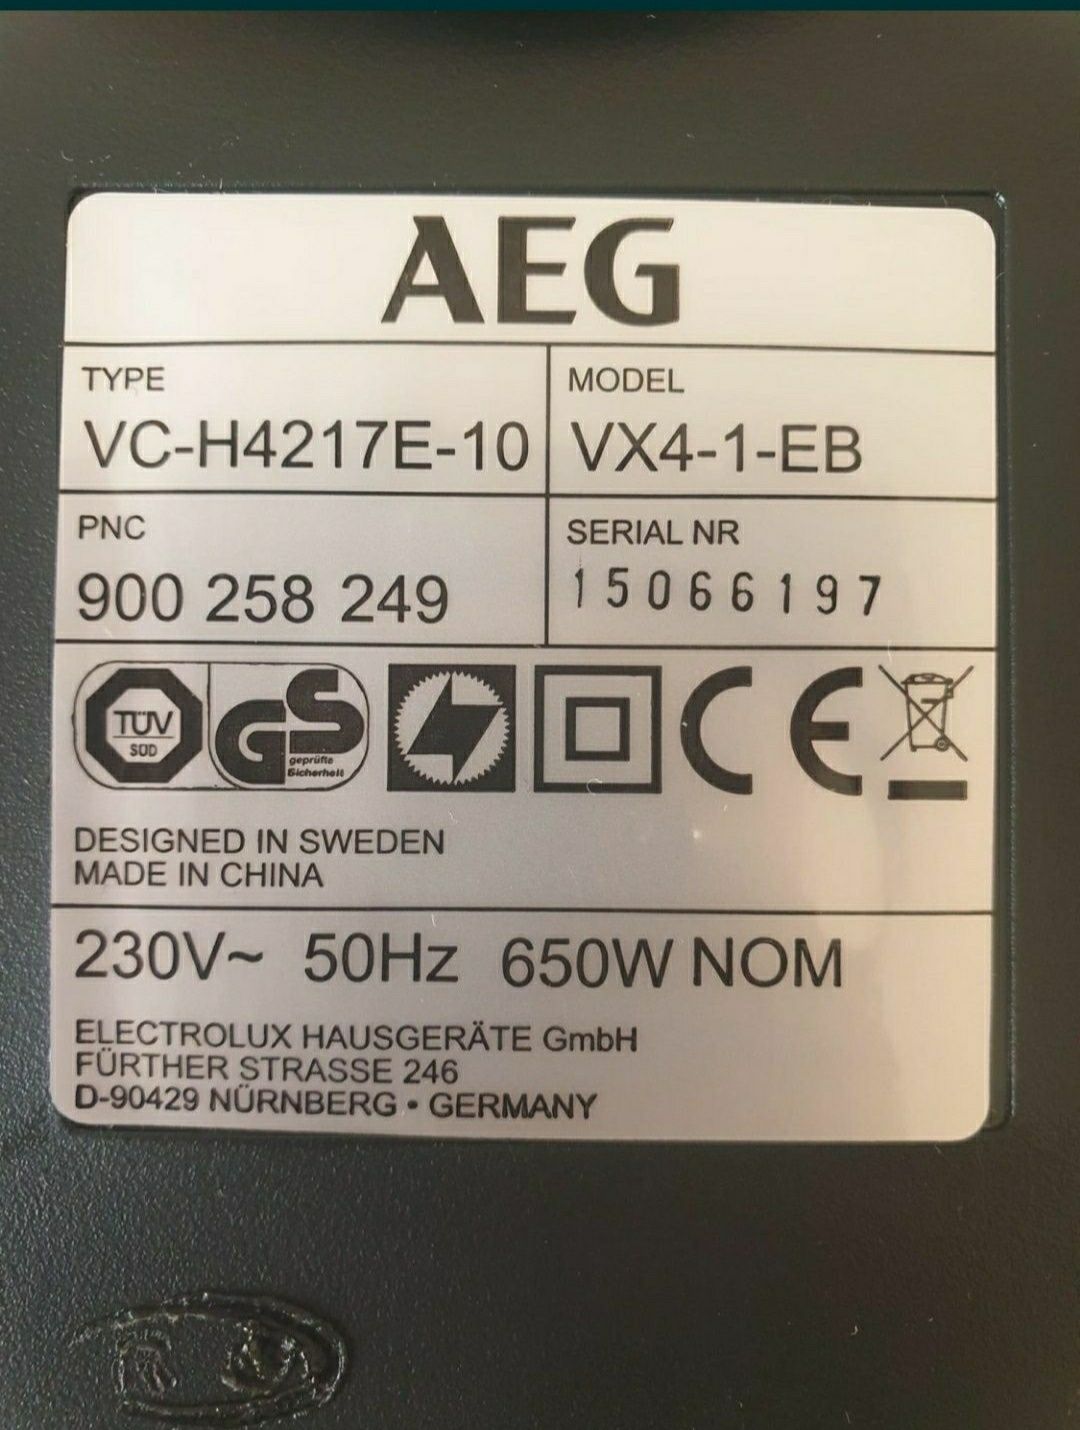 Aspirator AEG VX4-1 -EB